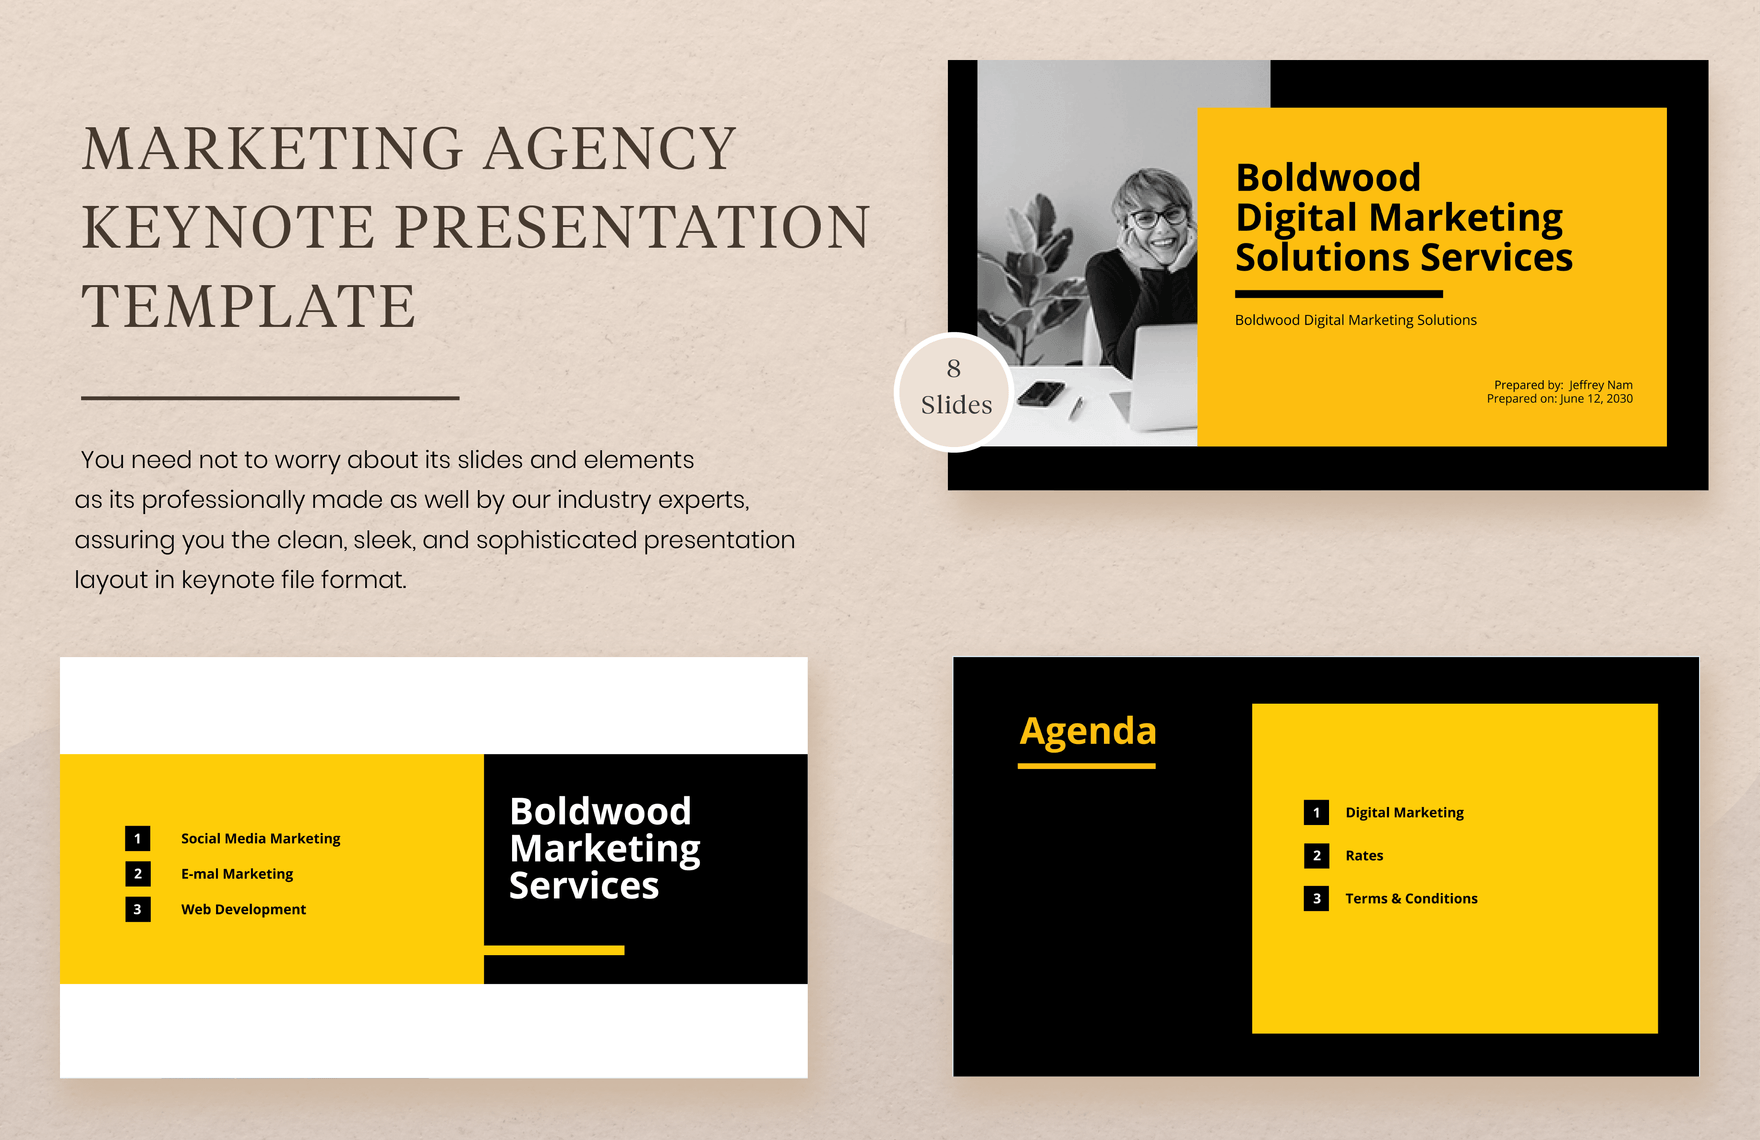 Marketing Agency Keynote Presentation Template